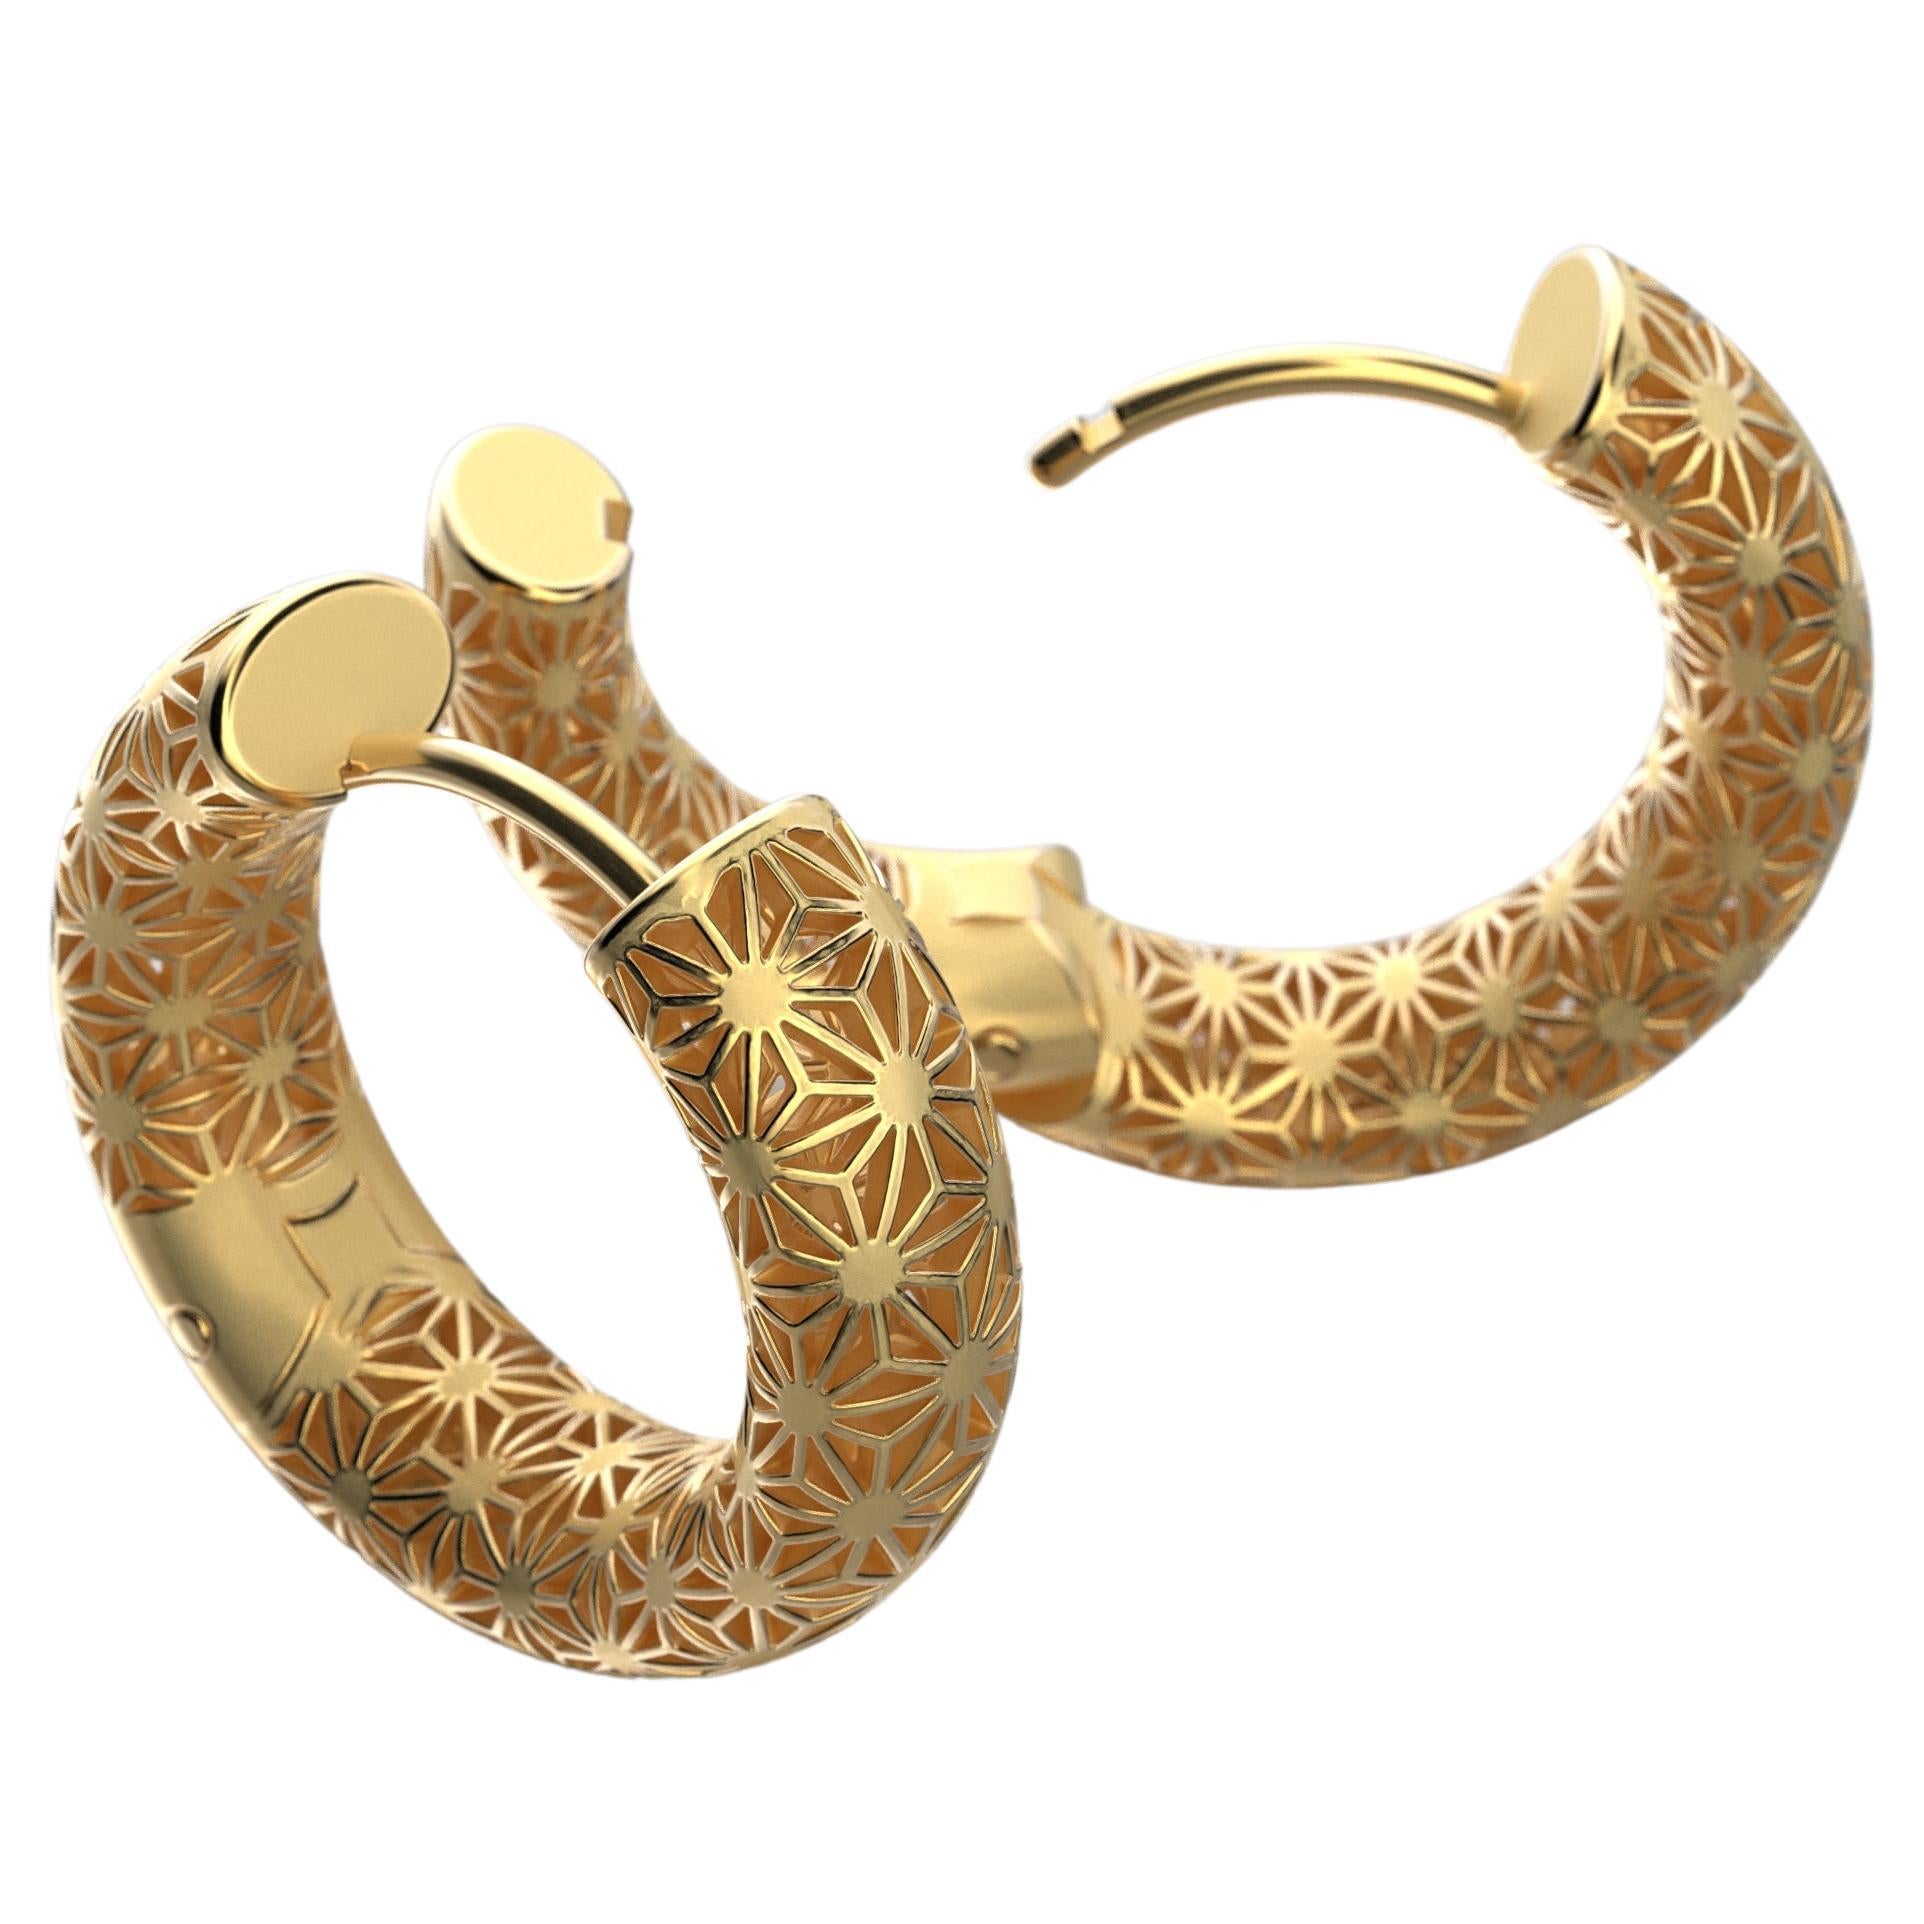  Oltremare Gioielli 14K Italian Gold Hoop Earrings - Sashiko Japanese Pattern 